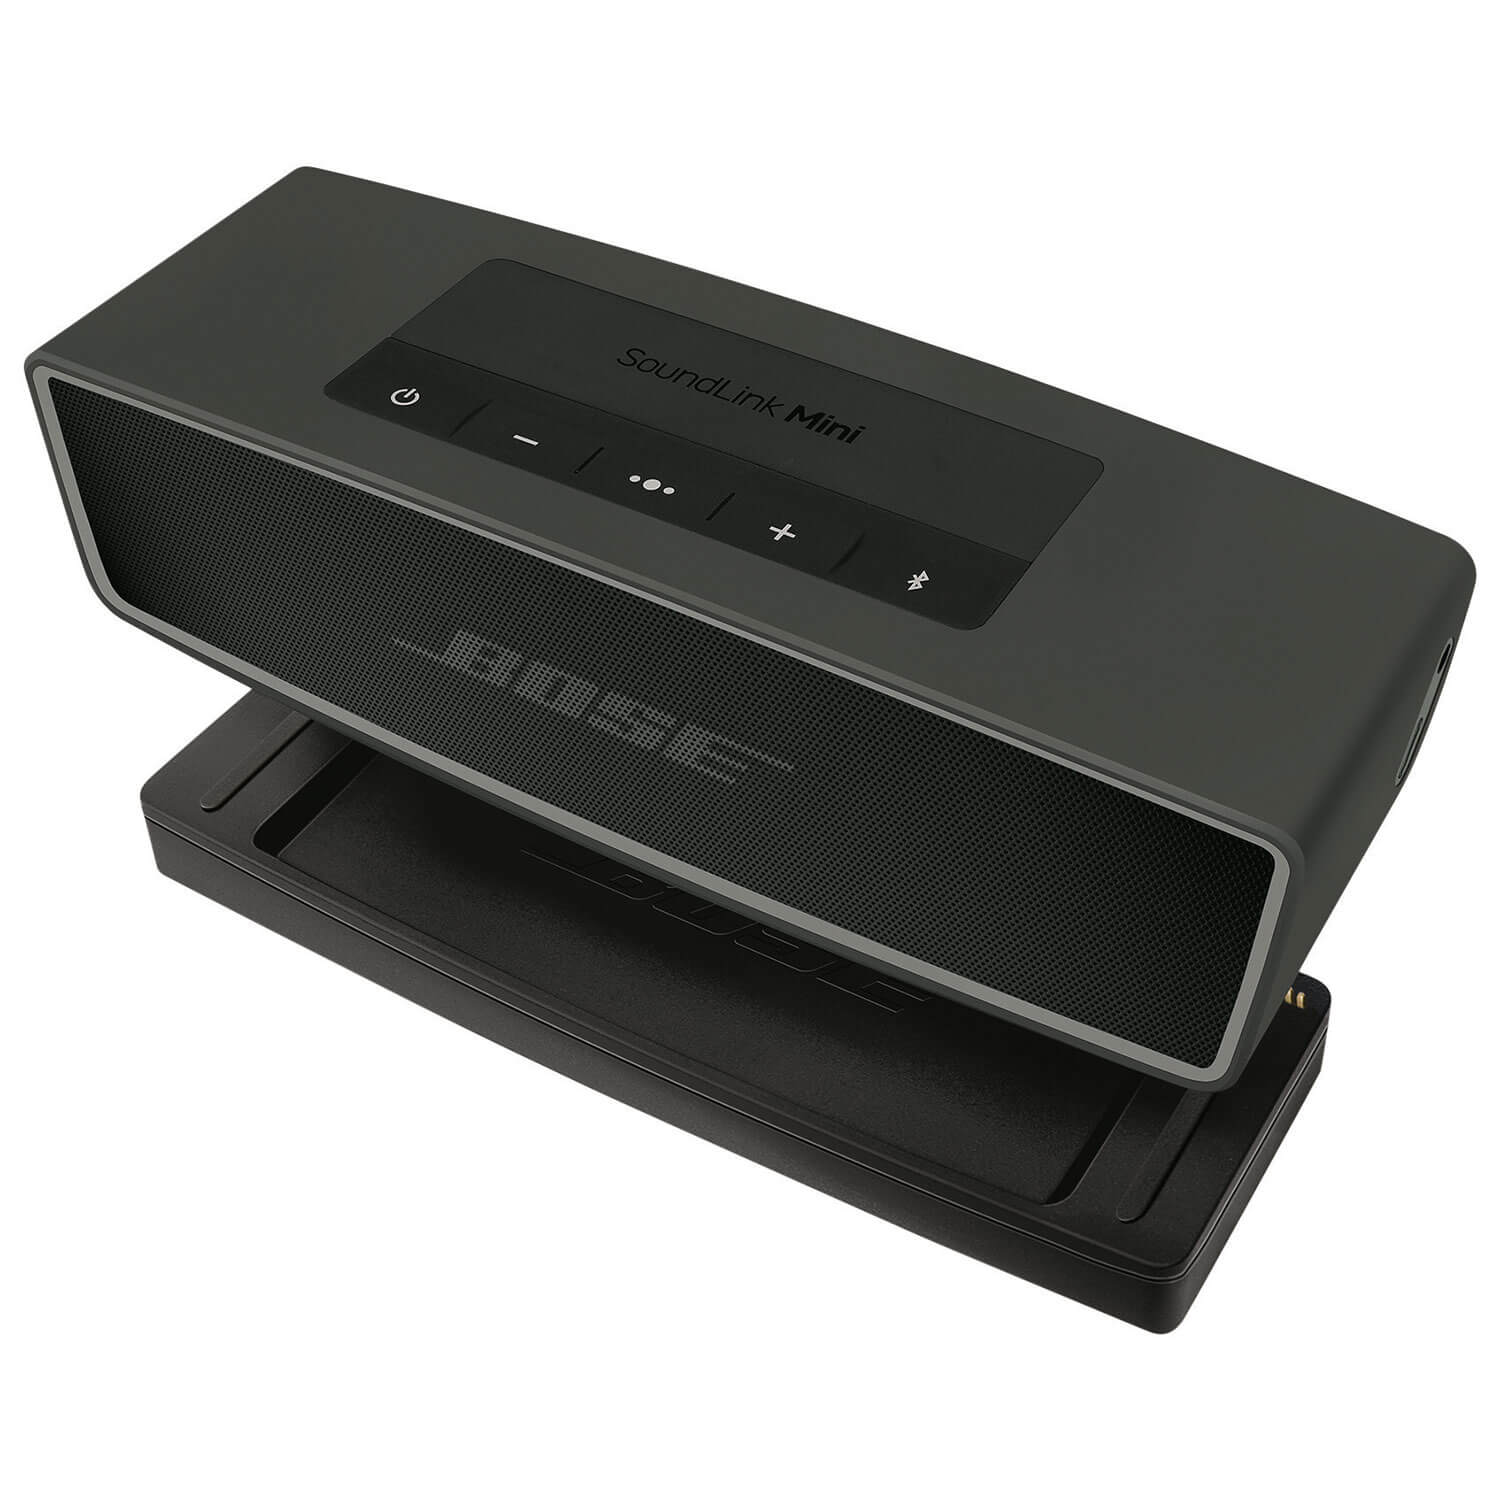 Bose-SoundLink-Mini-II Amazon certified best speaker for Eco Dot pairing